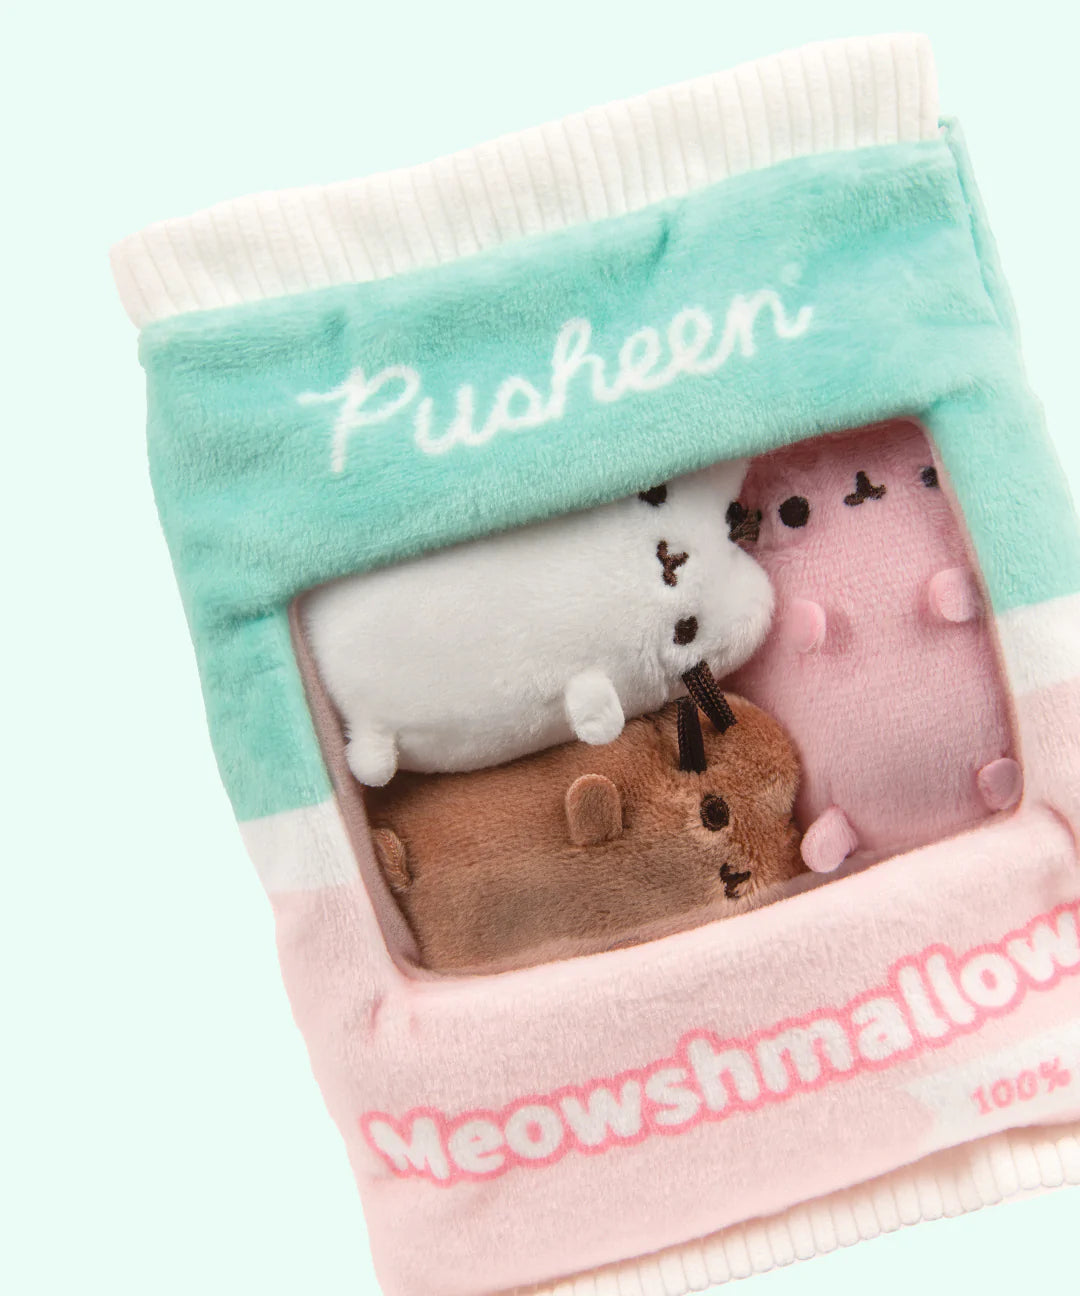 Pusheen Meowshmallows Plush